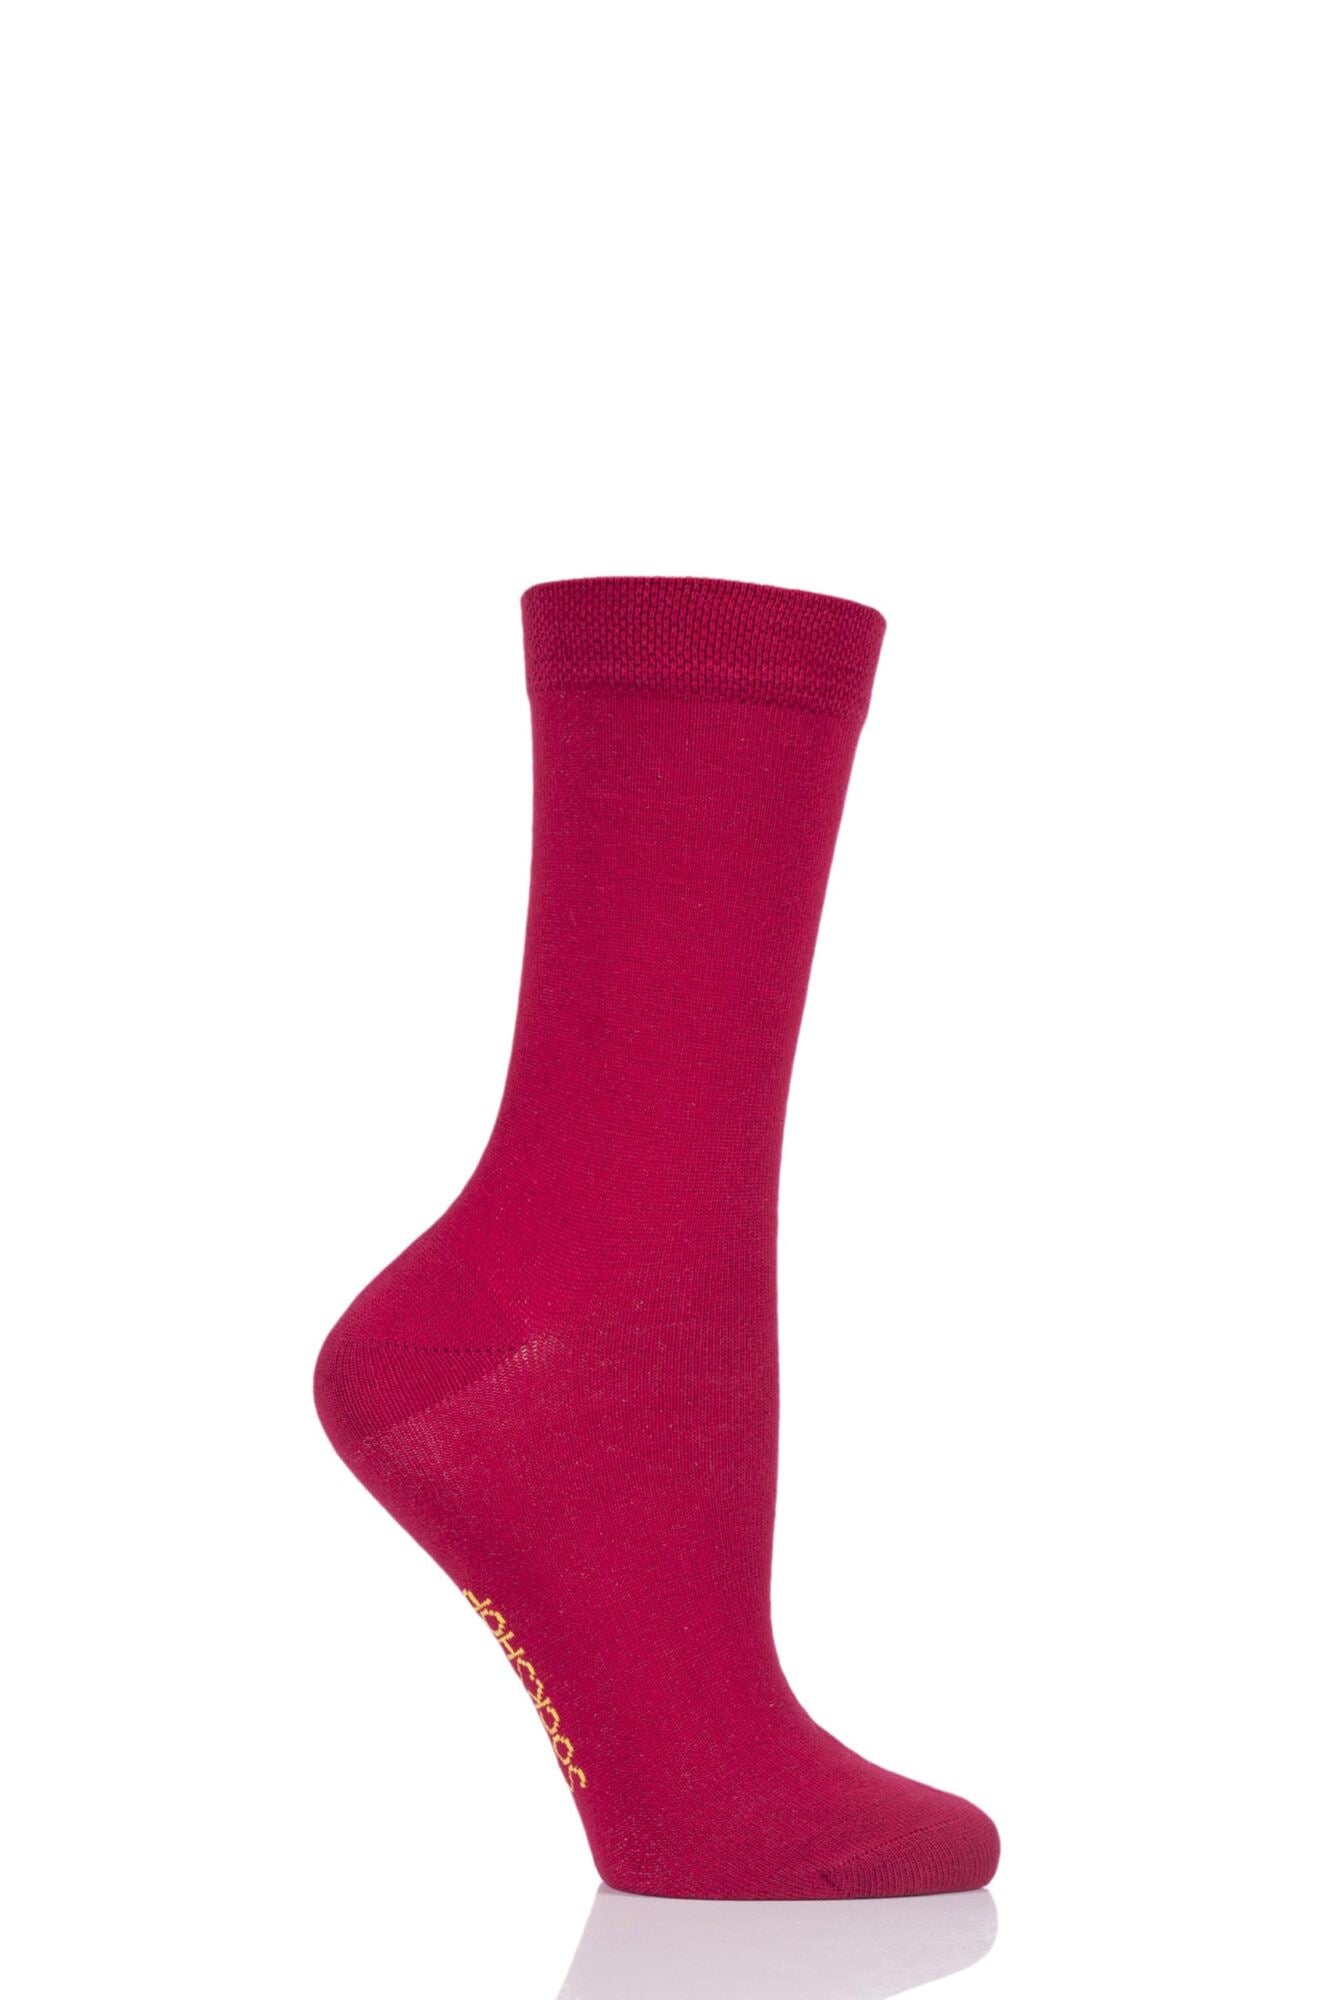 Sockshop-Ladies Bamboo Socks-Colour Burst-Raspberry Beret